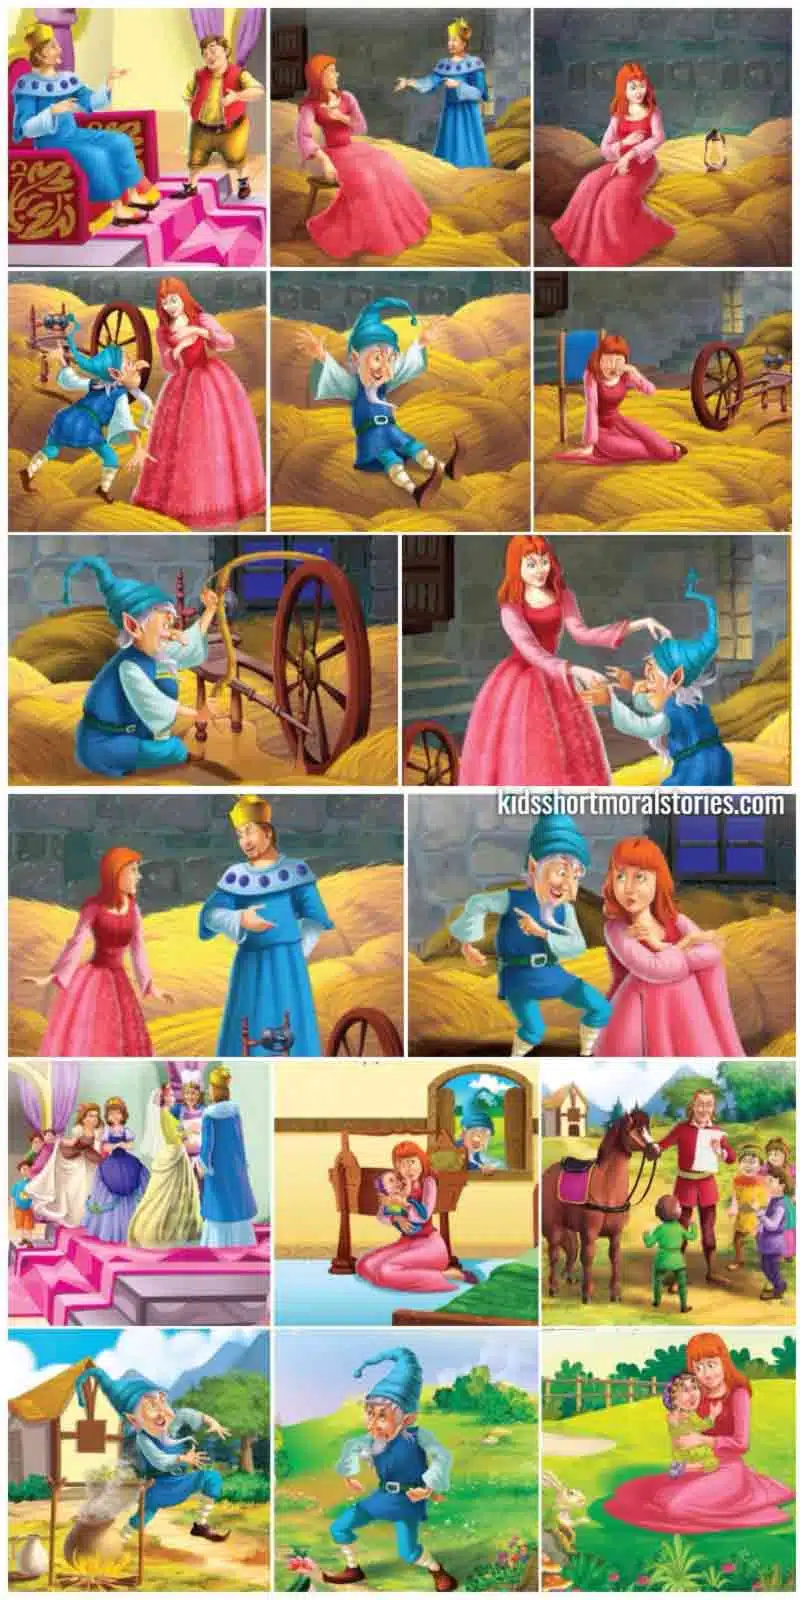 Rumpelstiltskin - Classic Fairy Tales and Stories For Children